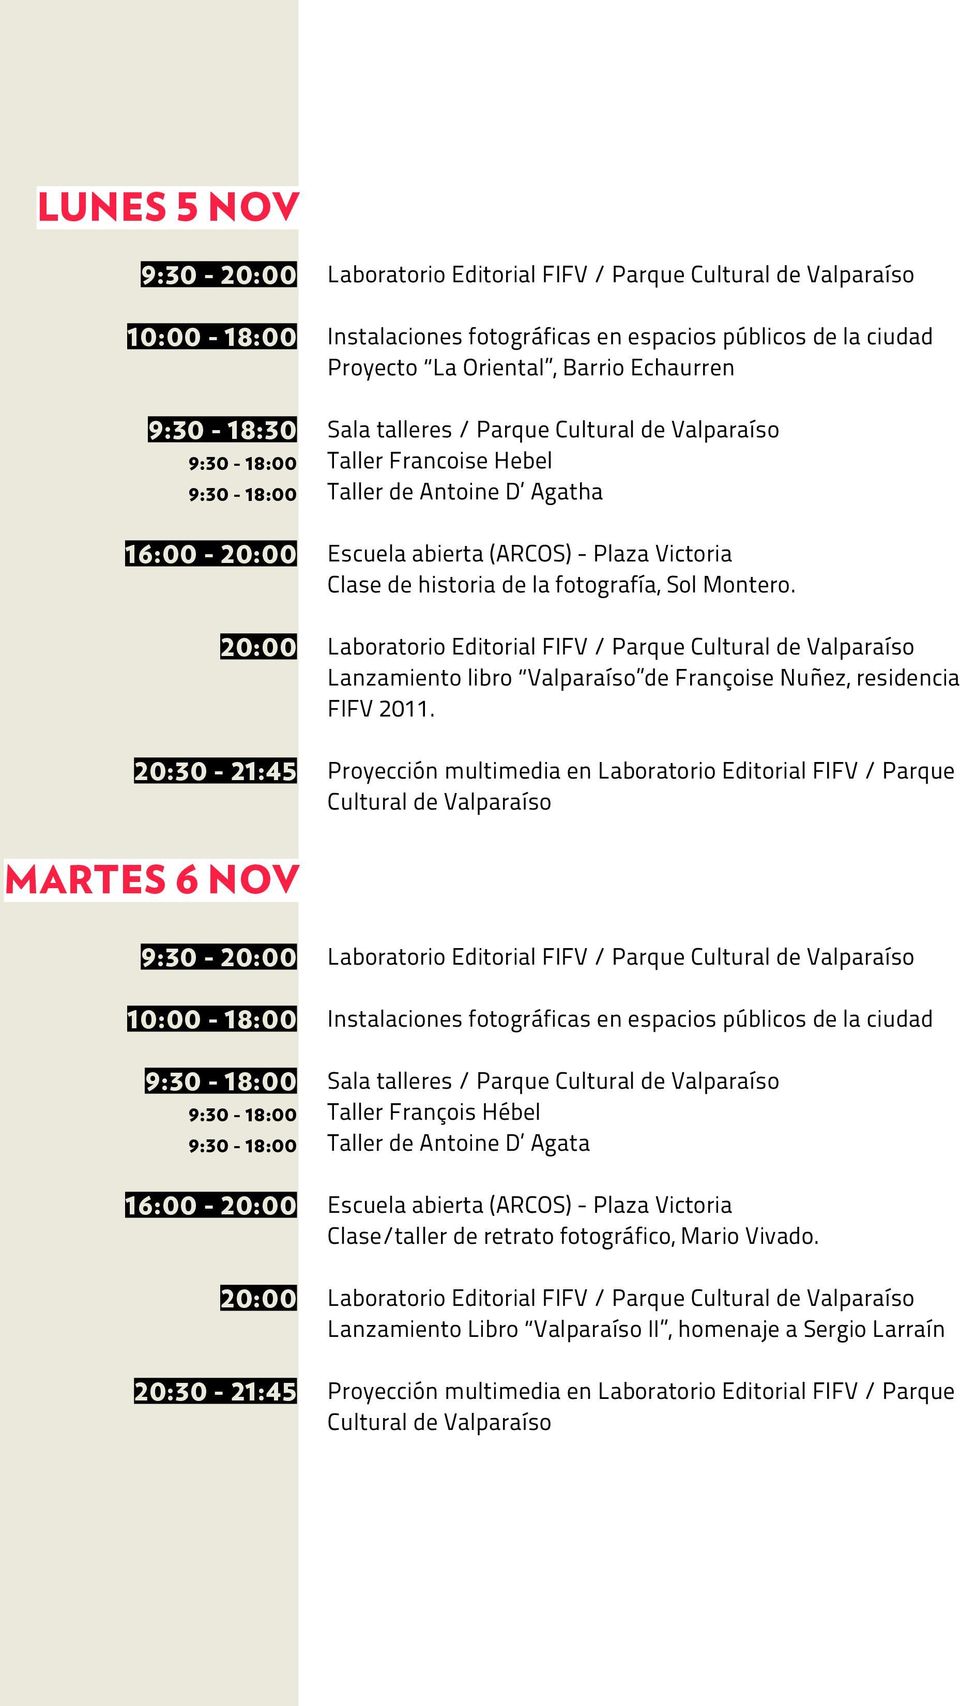 Proyección multimedia en Laboratorio Editorial FIFV / Parque Cultural de Valparaíso MARTES 6 NOV 16:00-20:00 20:00 20:30-21:45 Taller François Hébel Taller